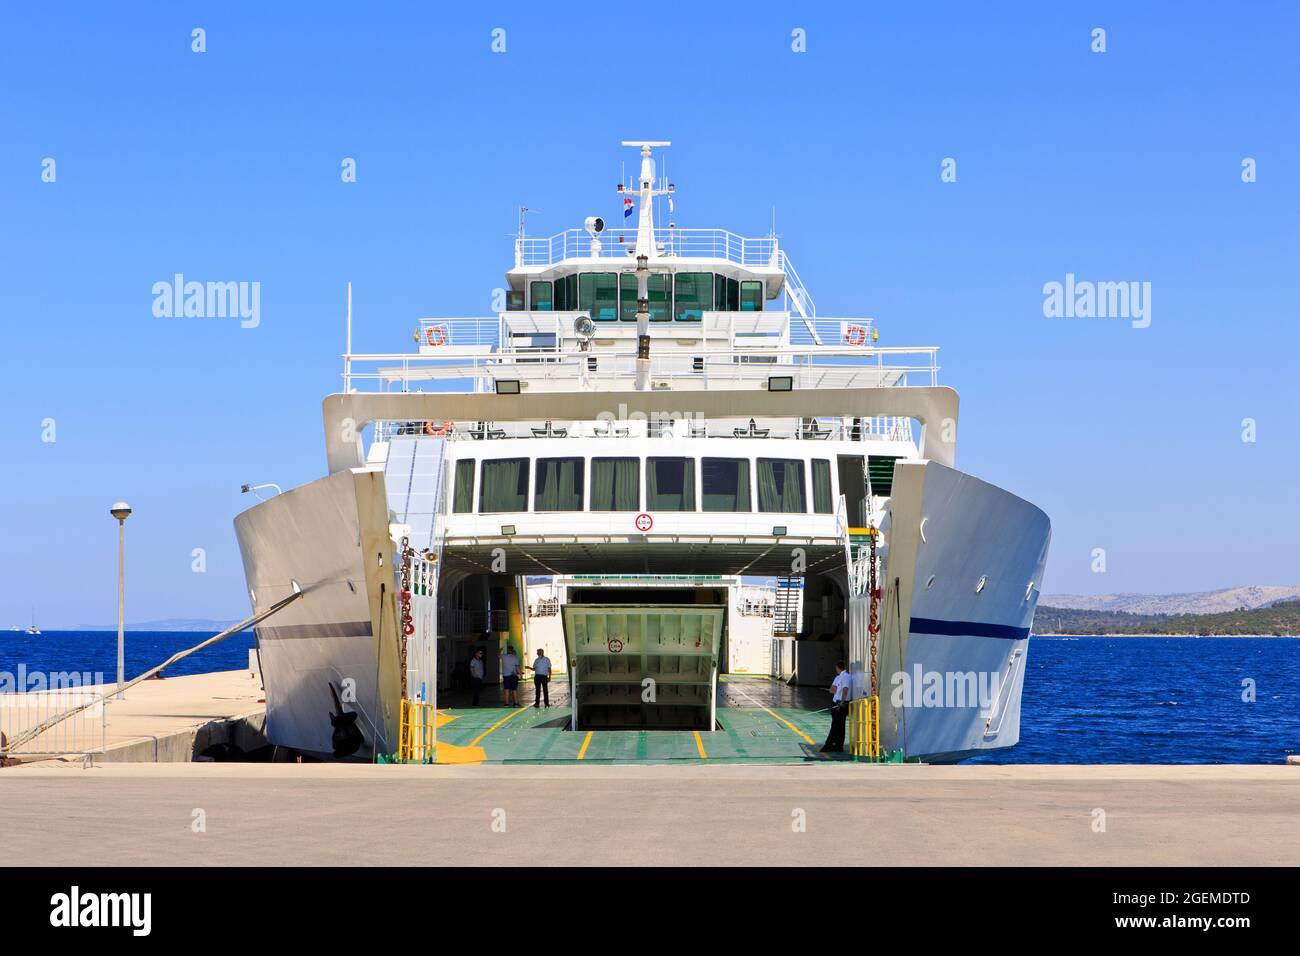 The Faros car ferry operated by Jadrolinija in Stari Grad (Hvar Island), Croatia Stock Photo